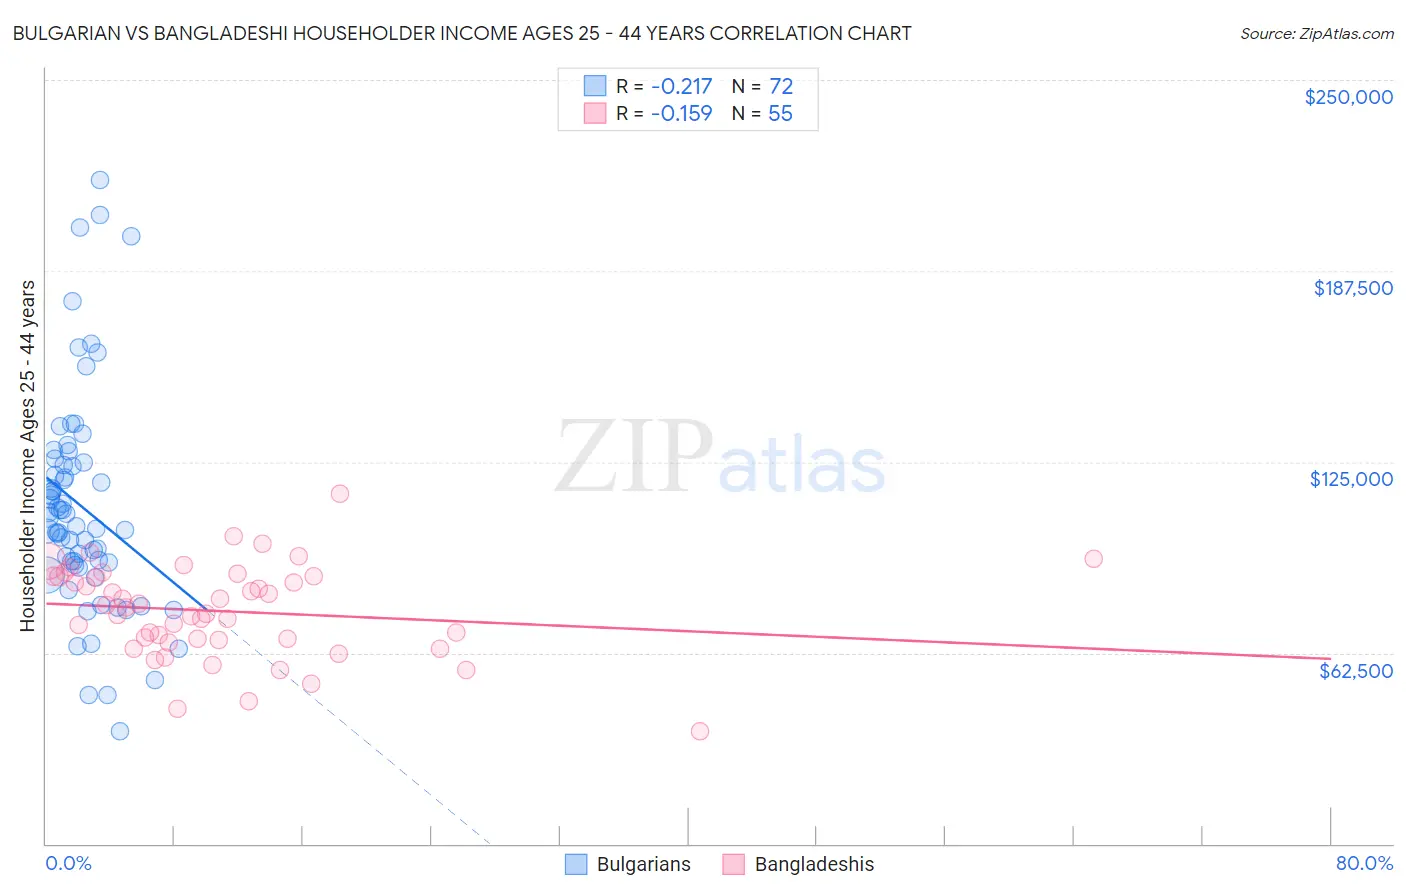 Bulgarian vs Bangladeshi Householder Income Ages 25 - 44 years